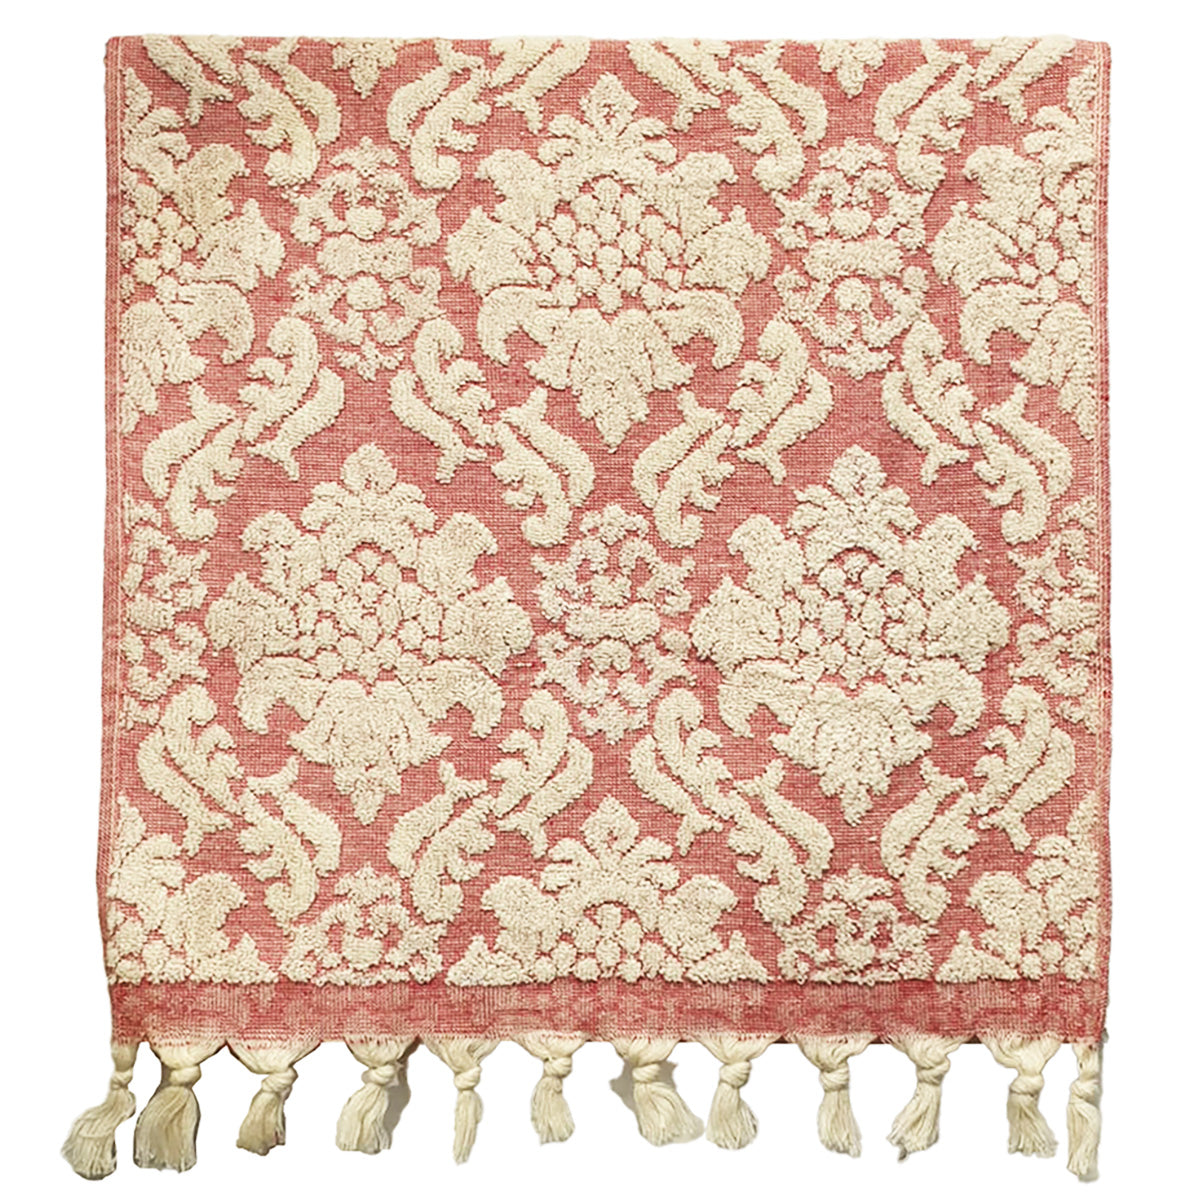 Damascus Design Natural Cotton Hand Towels Pink